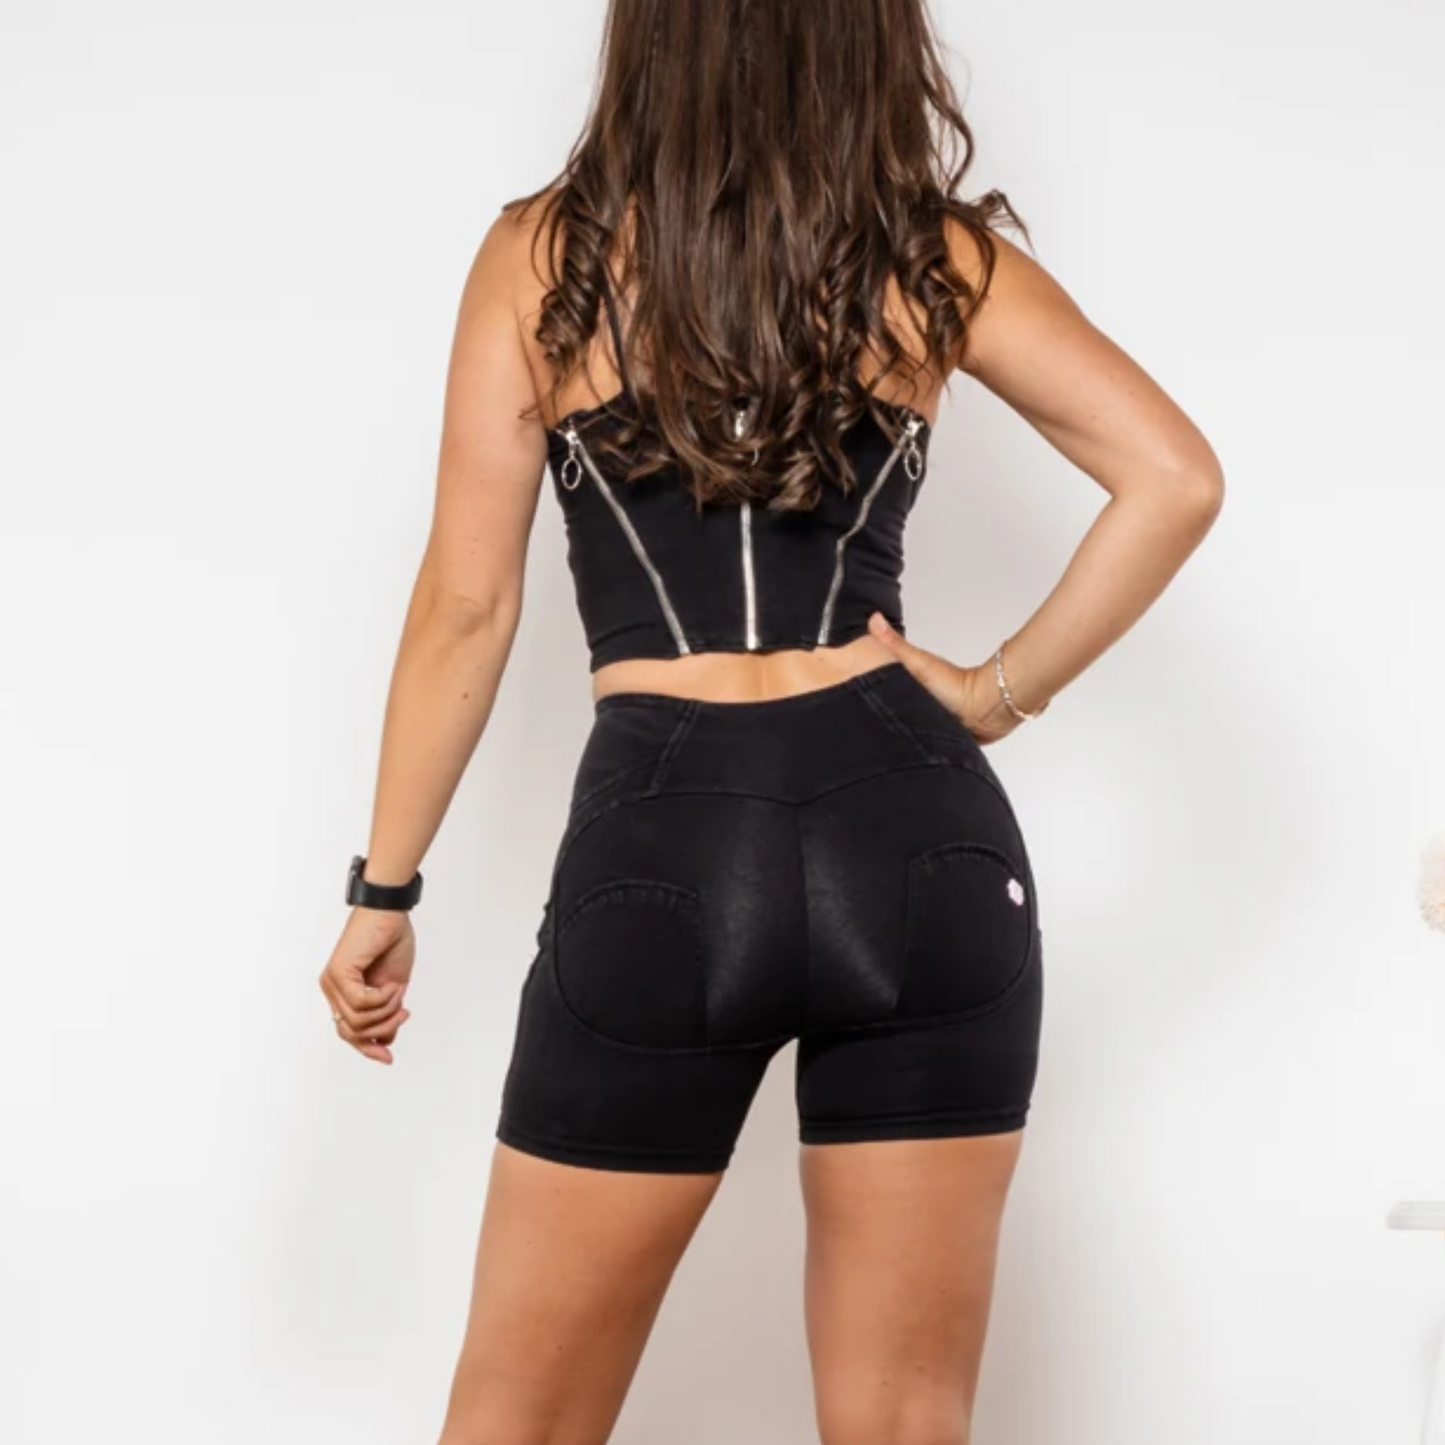 Cheeky Black Butt Lift Shaper Shorts Set